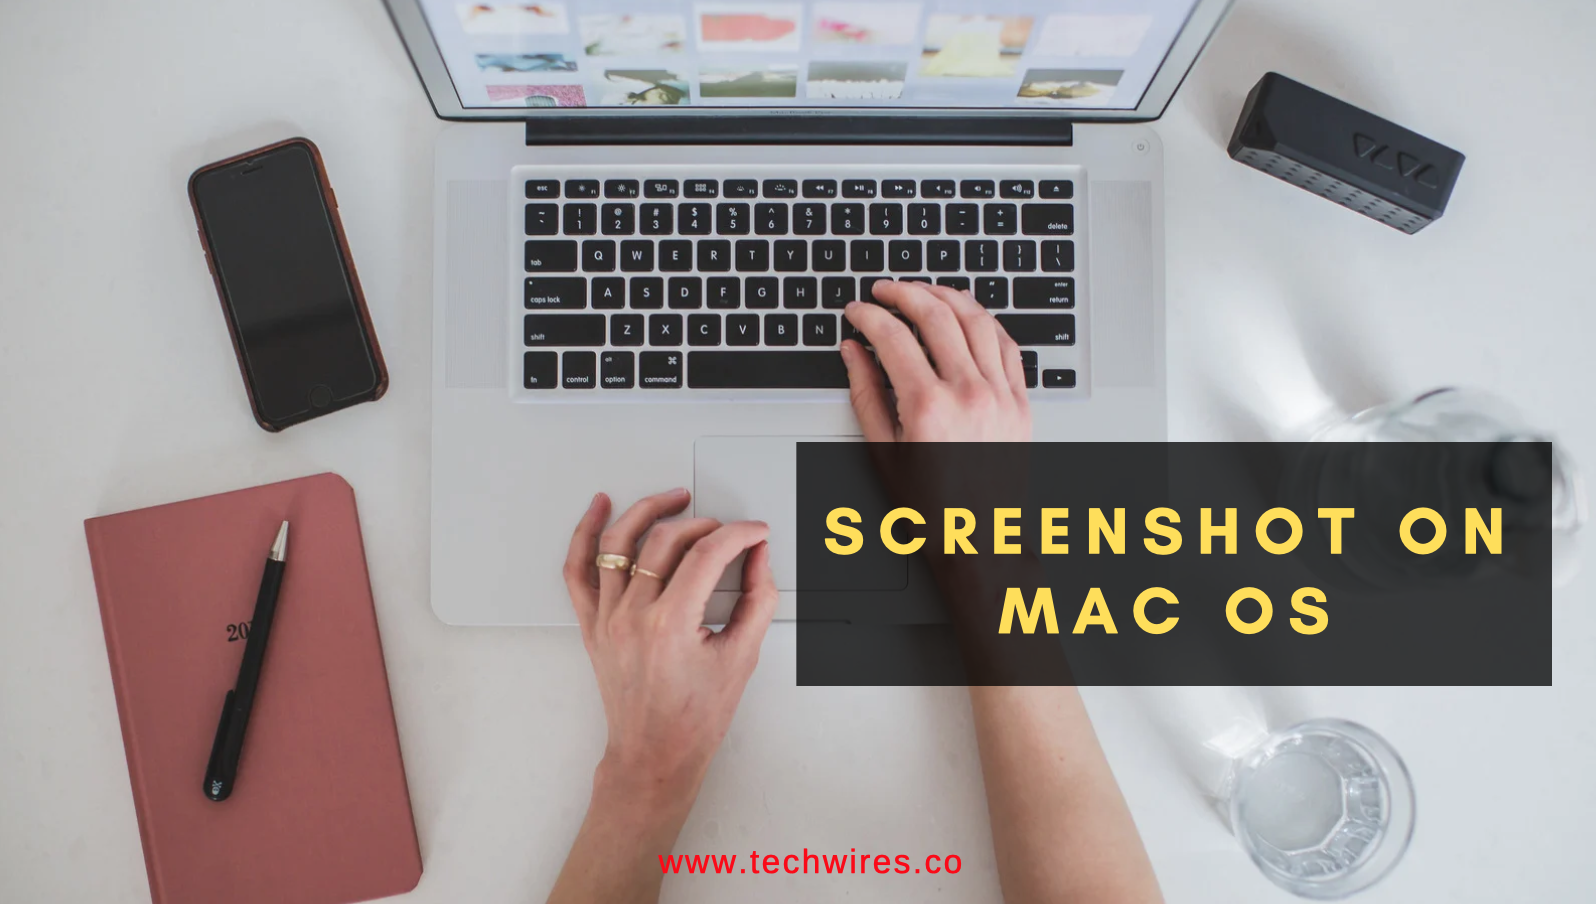 How to Take a Screenshot on Mac OS - 5 Helpful Tips + Video